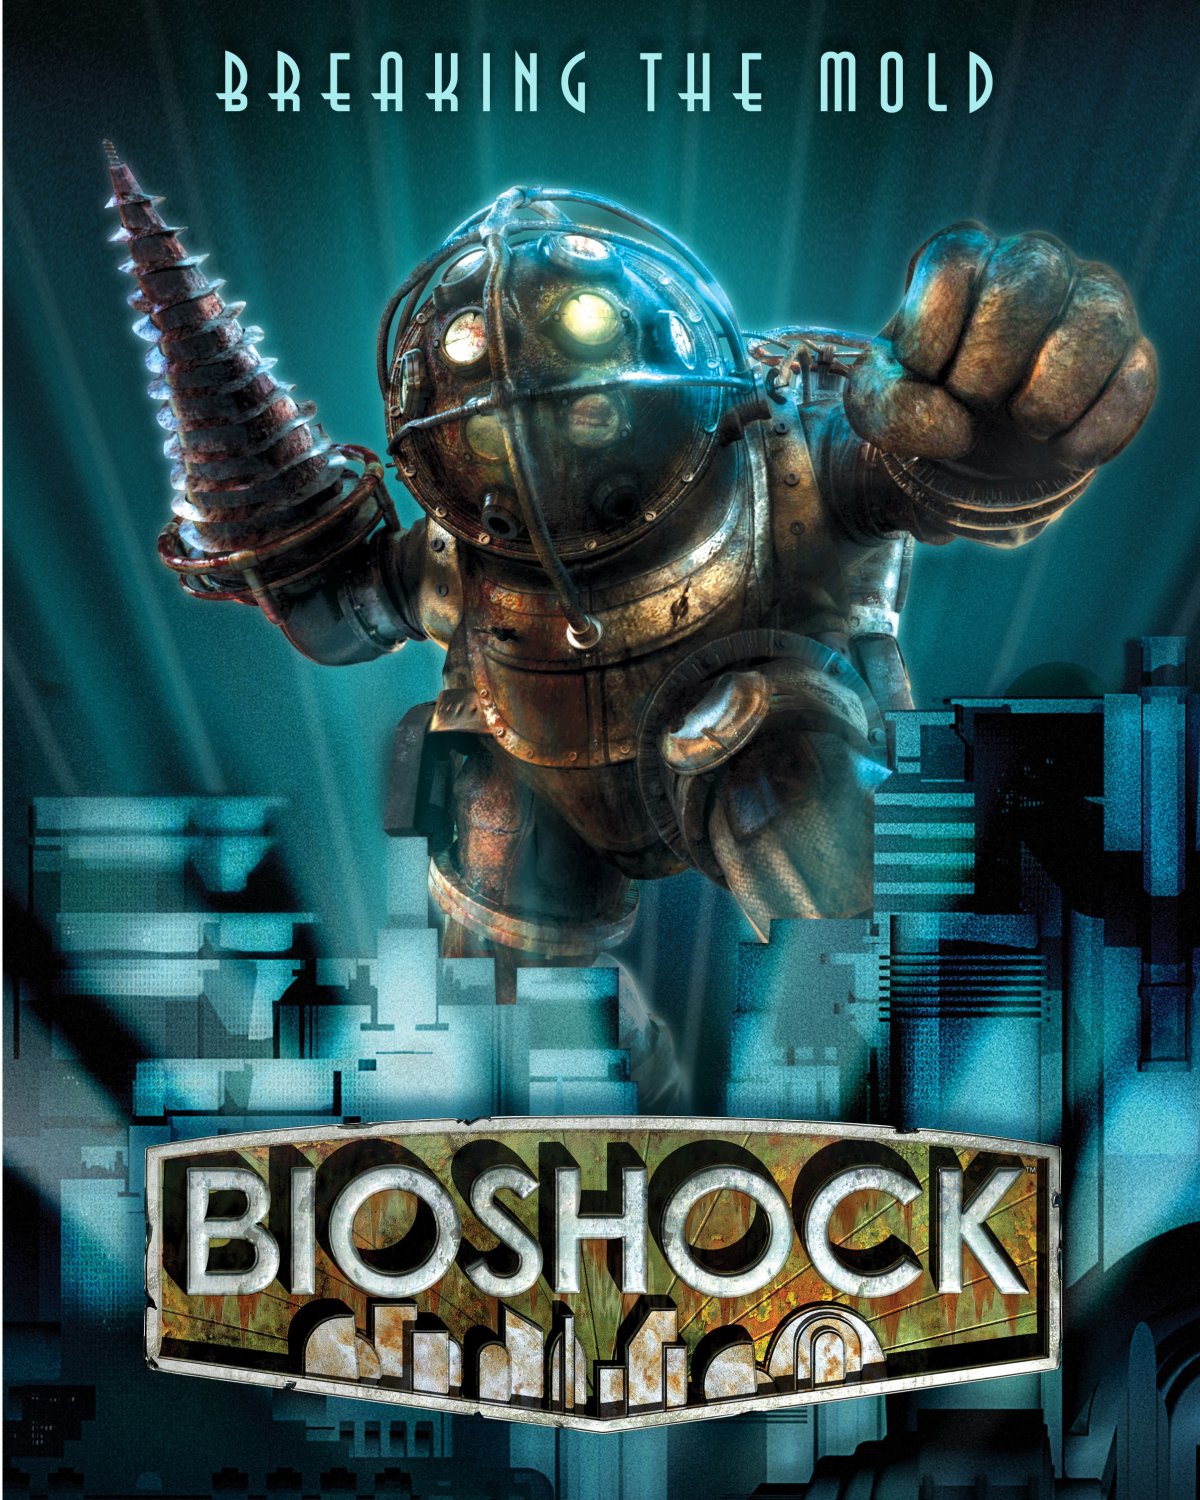 Bioshock  13"x19" (32cm/49cm) Polyester Fabric Poster